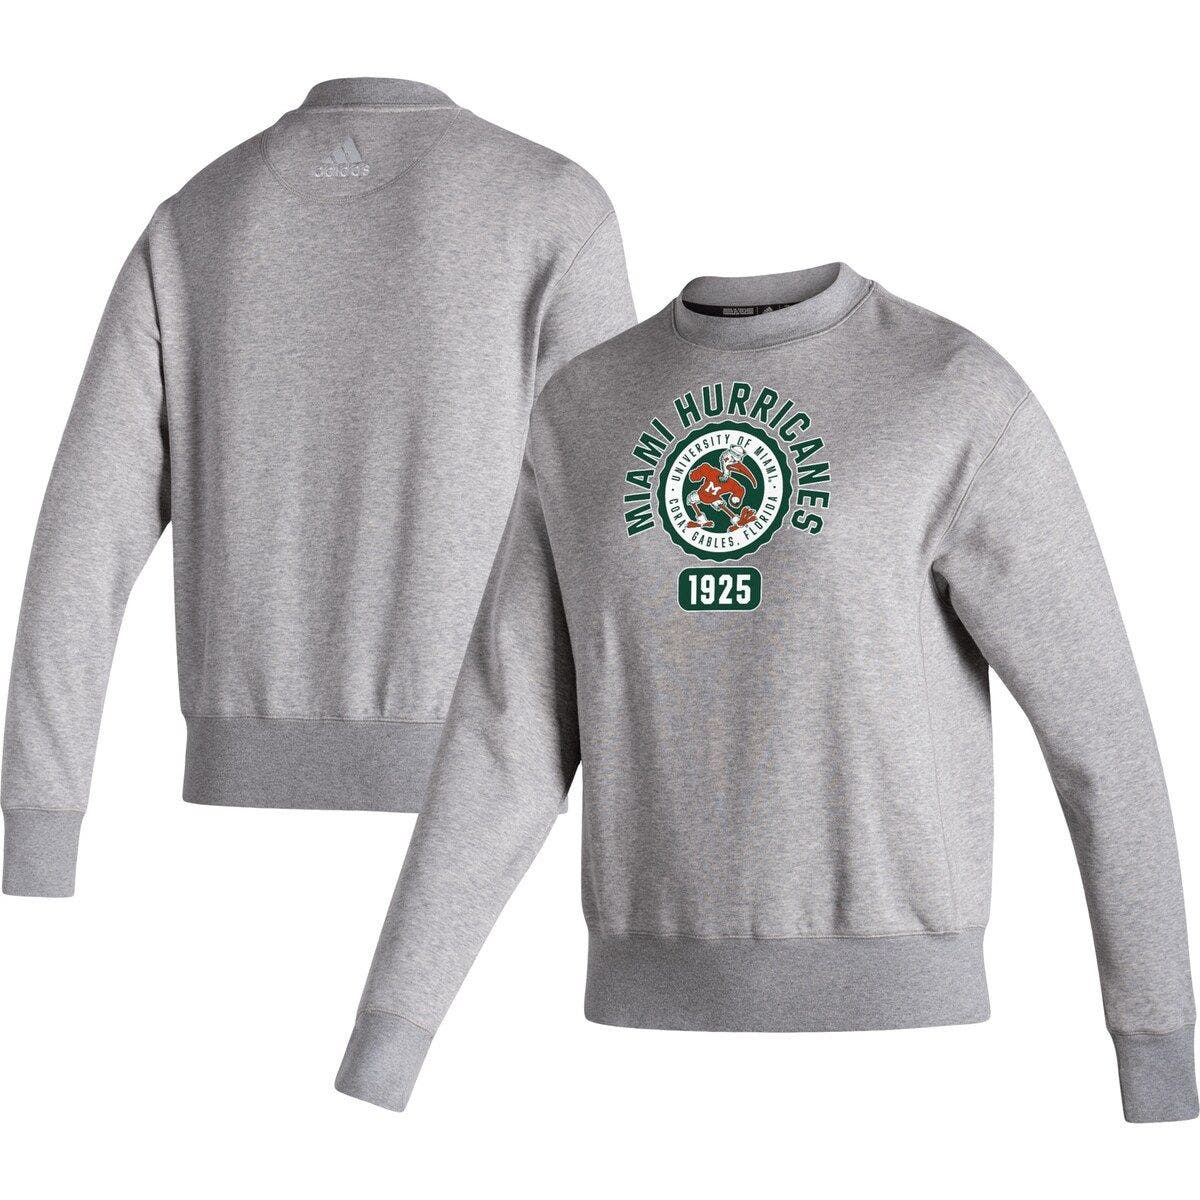 Official 2021 Minnesota Timberwolves Retro Vintage 2000_s Style NBA shirt,  hoodie, longsleeve, sweatshirt, v-neck tee